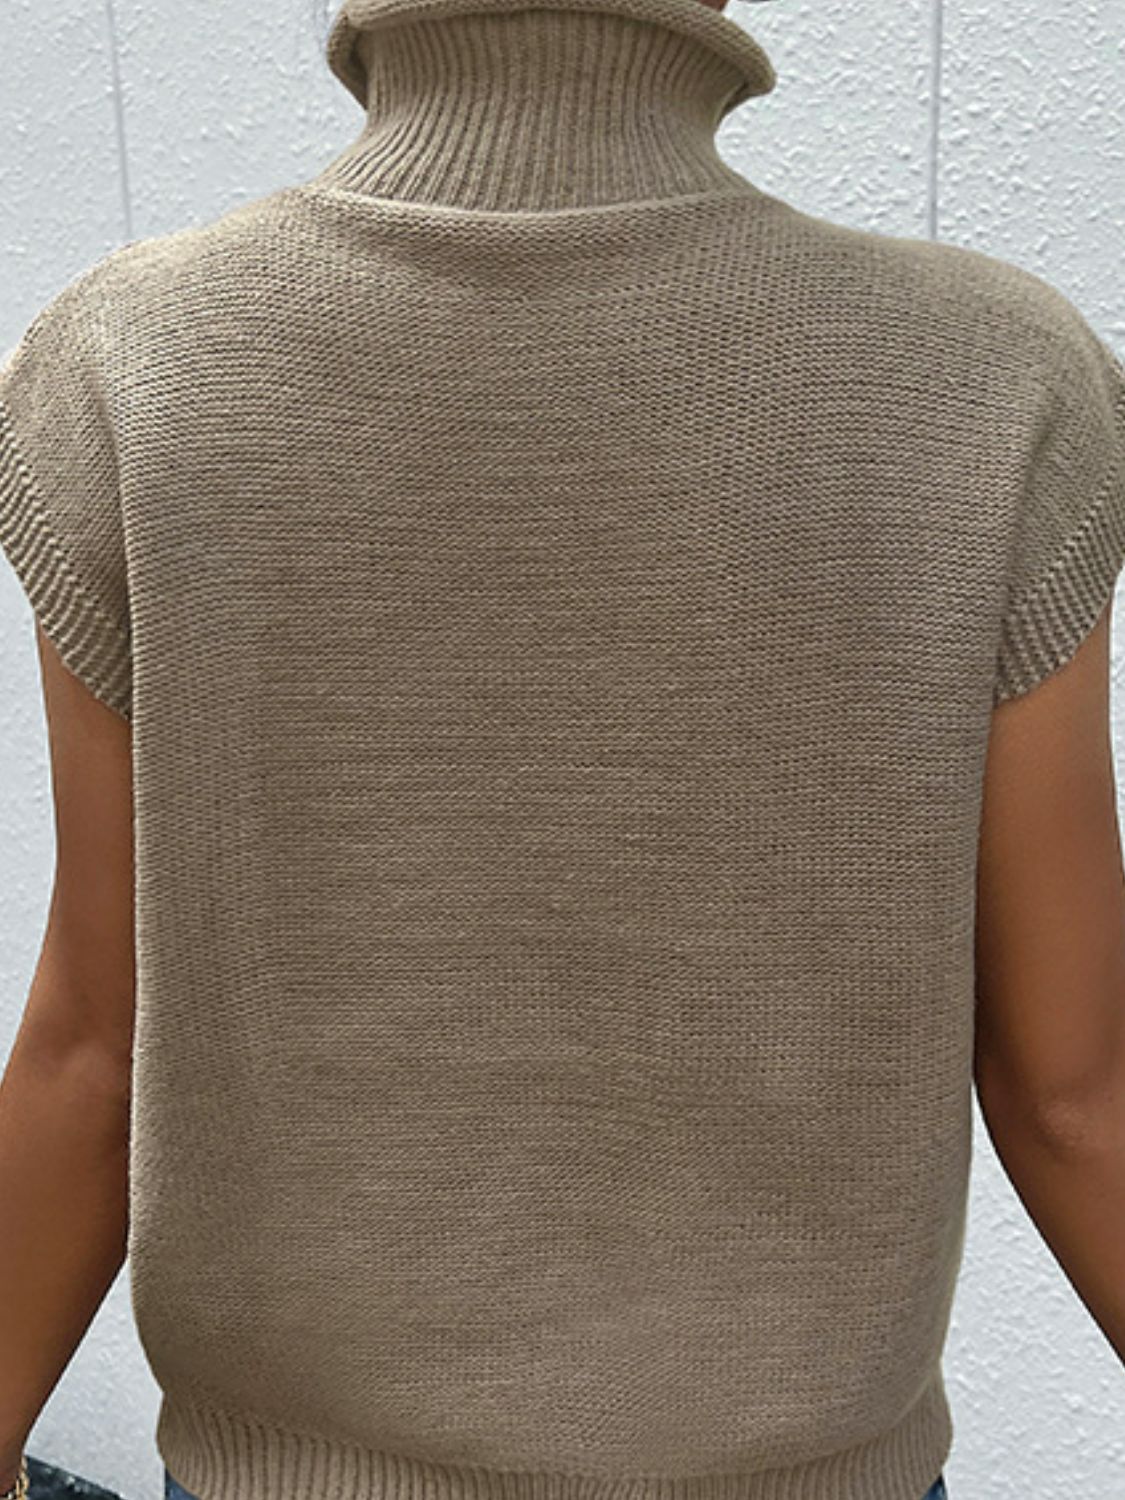 Mixed Knit Turtleneck Sweater Vest